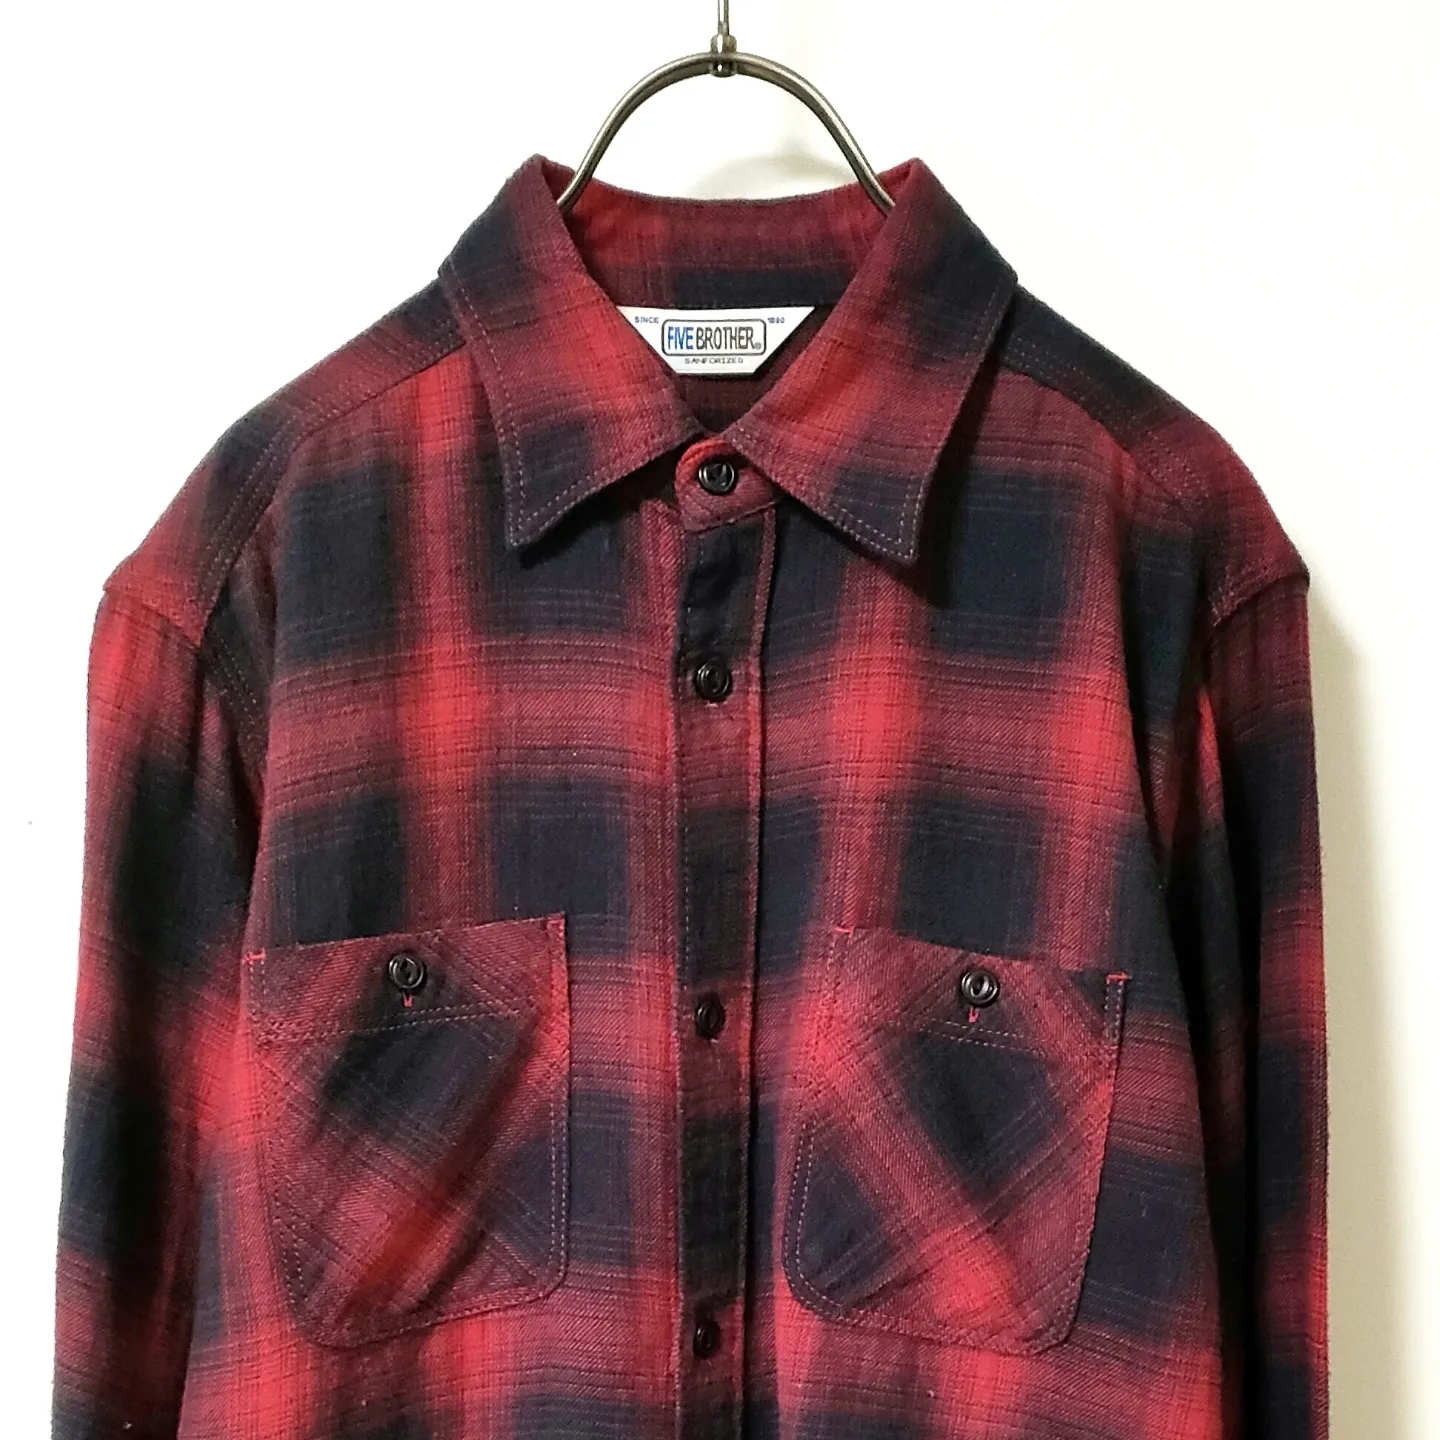 USA 秋冬 ヘビーネルシャツ 黒 オンブレチェック スナップボタン L